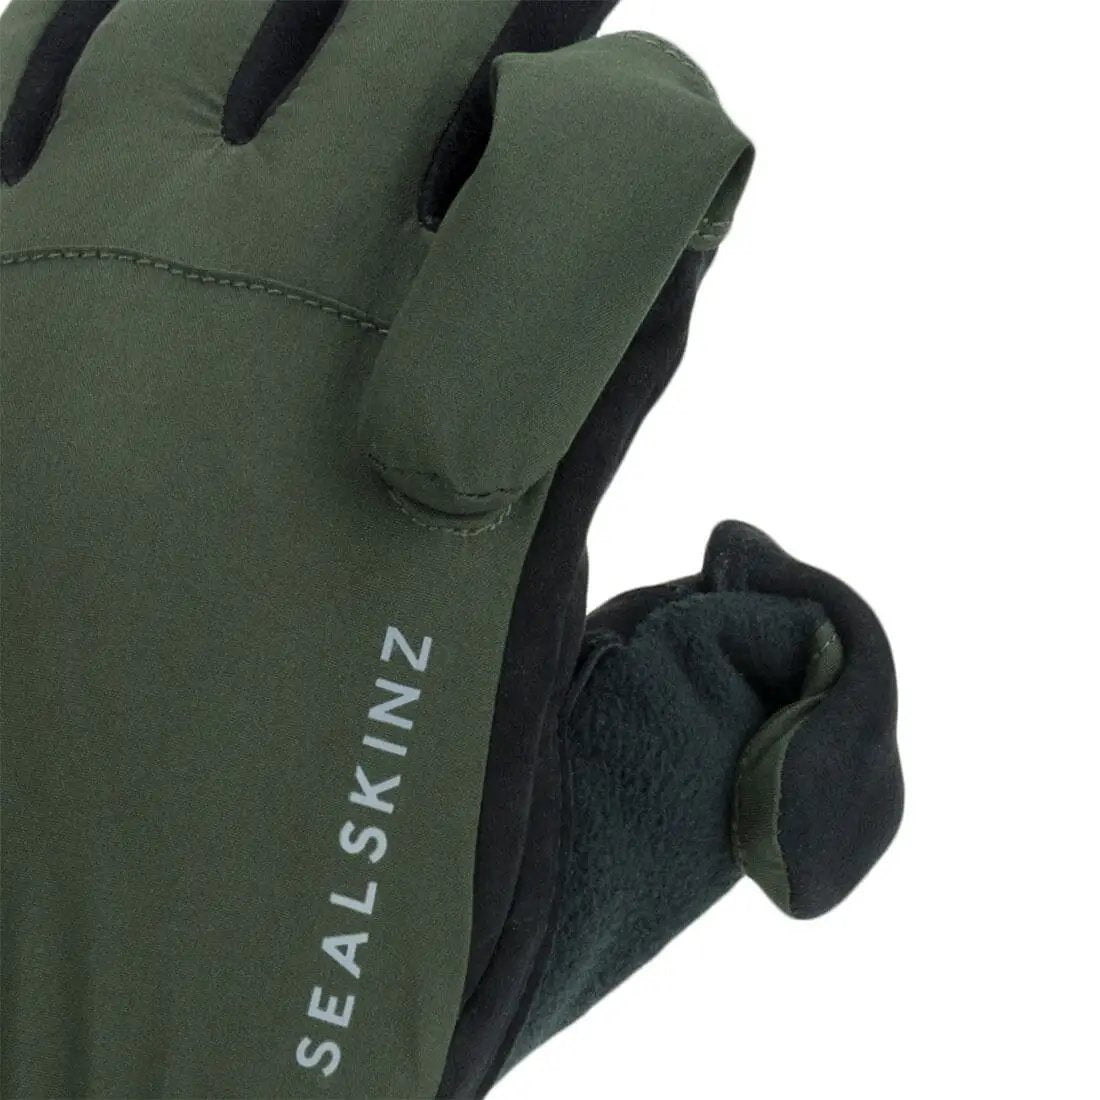 Sealskinz Waterproof All Weather Sporting Glove - John Bull Clothing